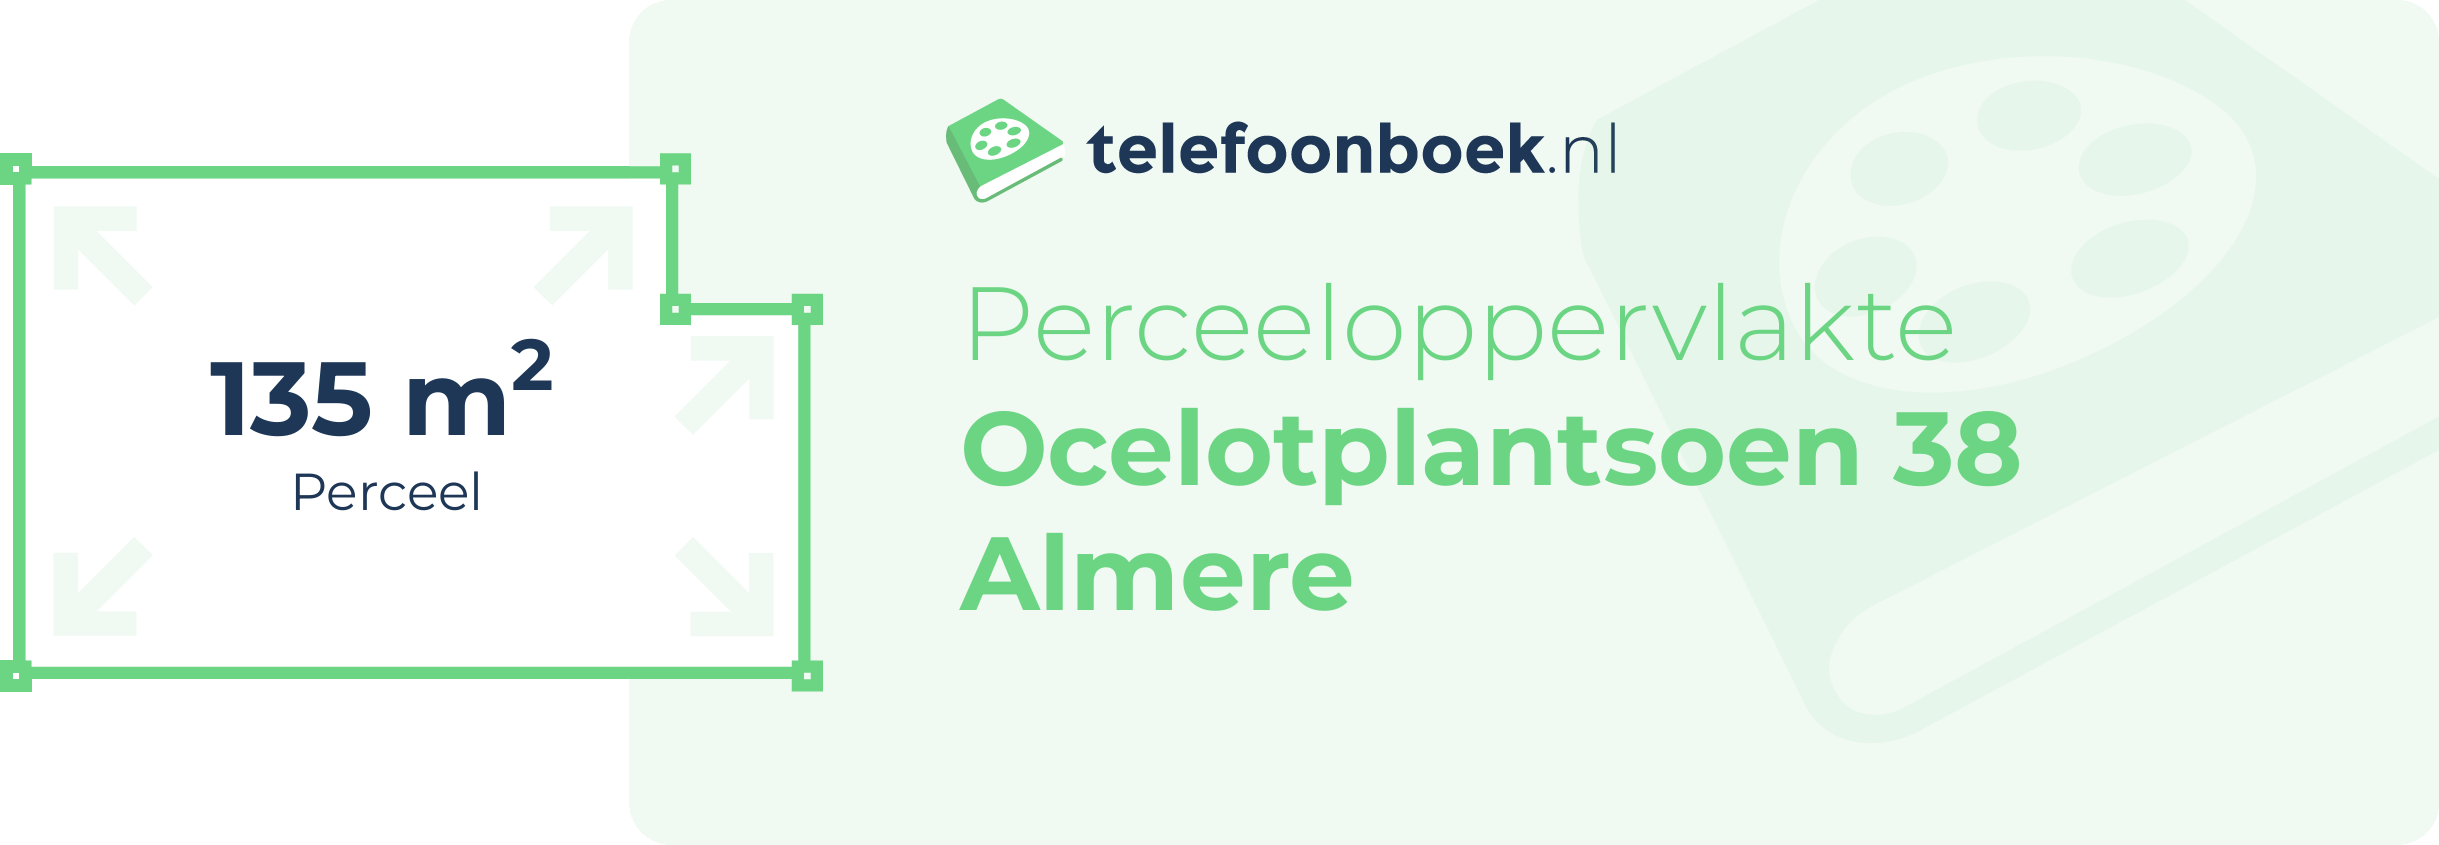 Perceeloppervlakte Ocelotplantsoen 38 Almere